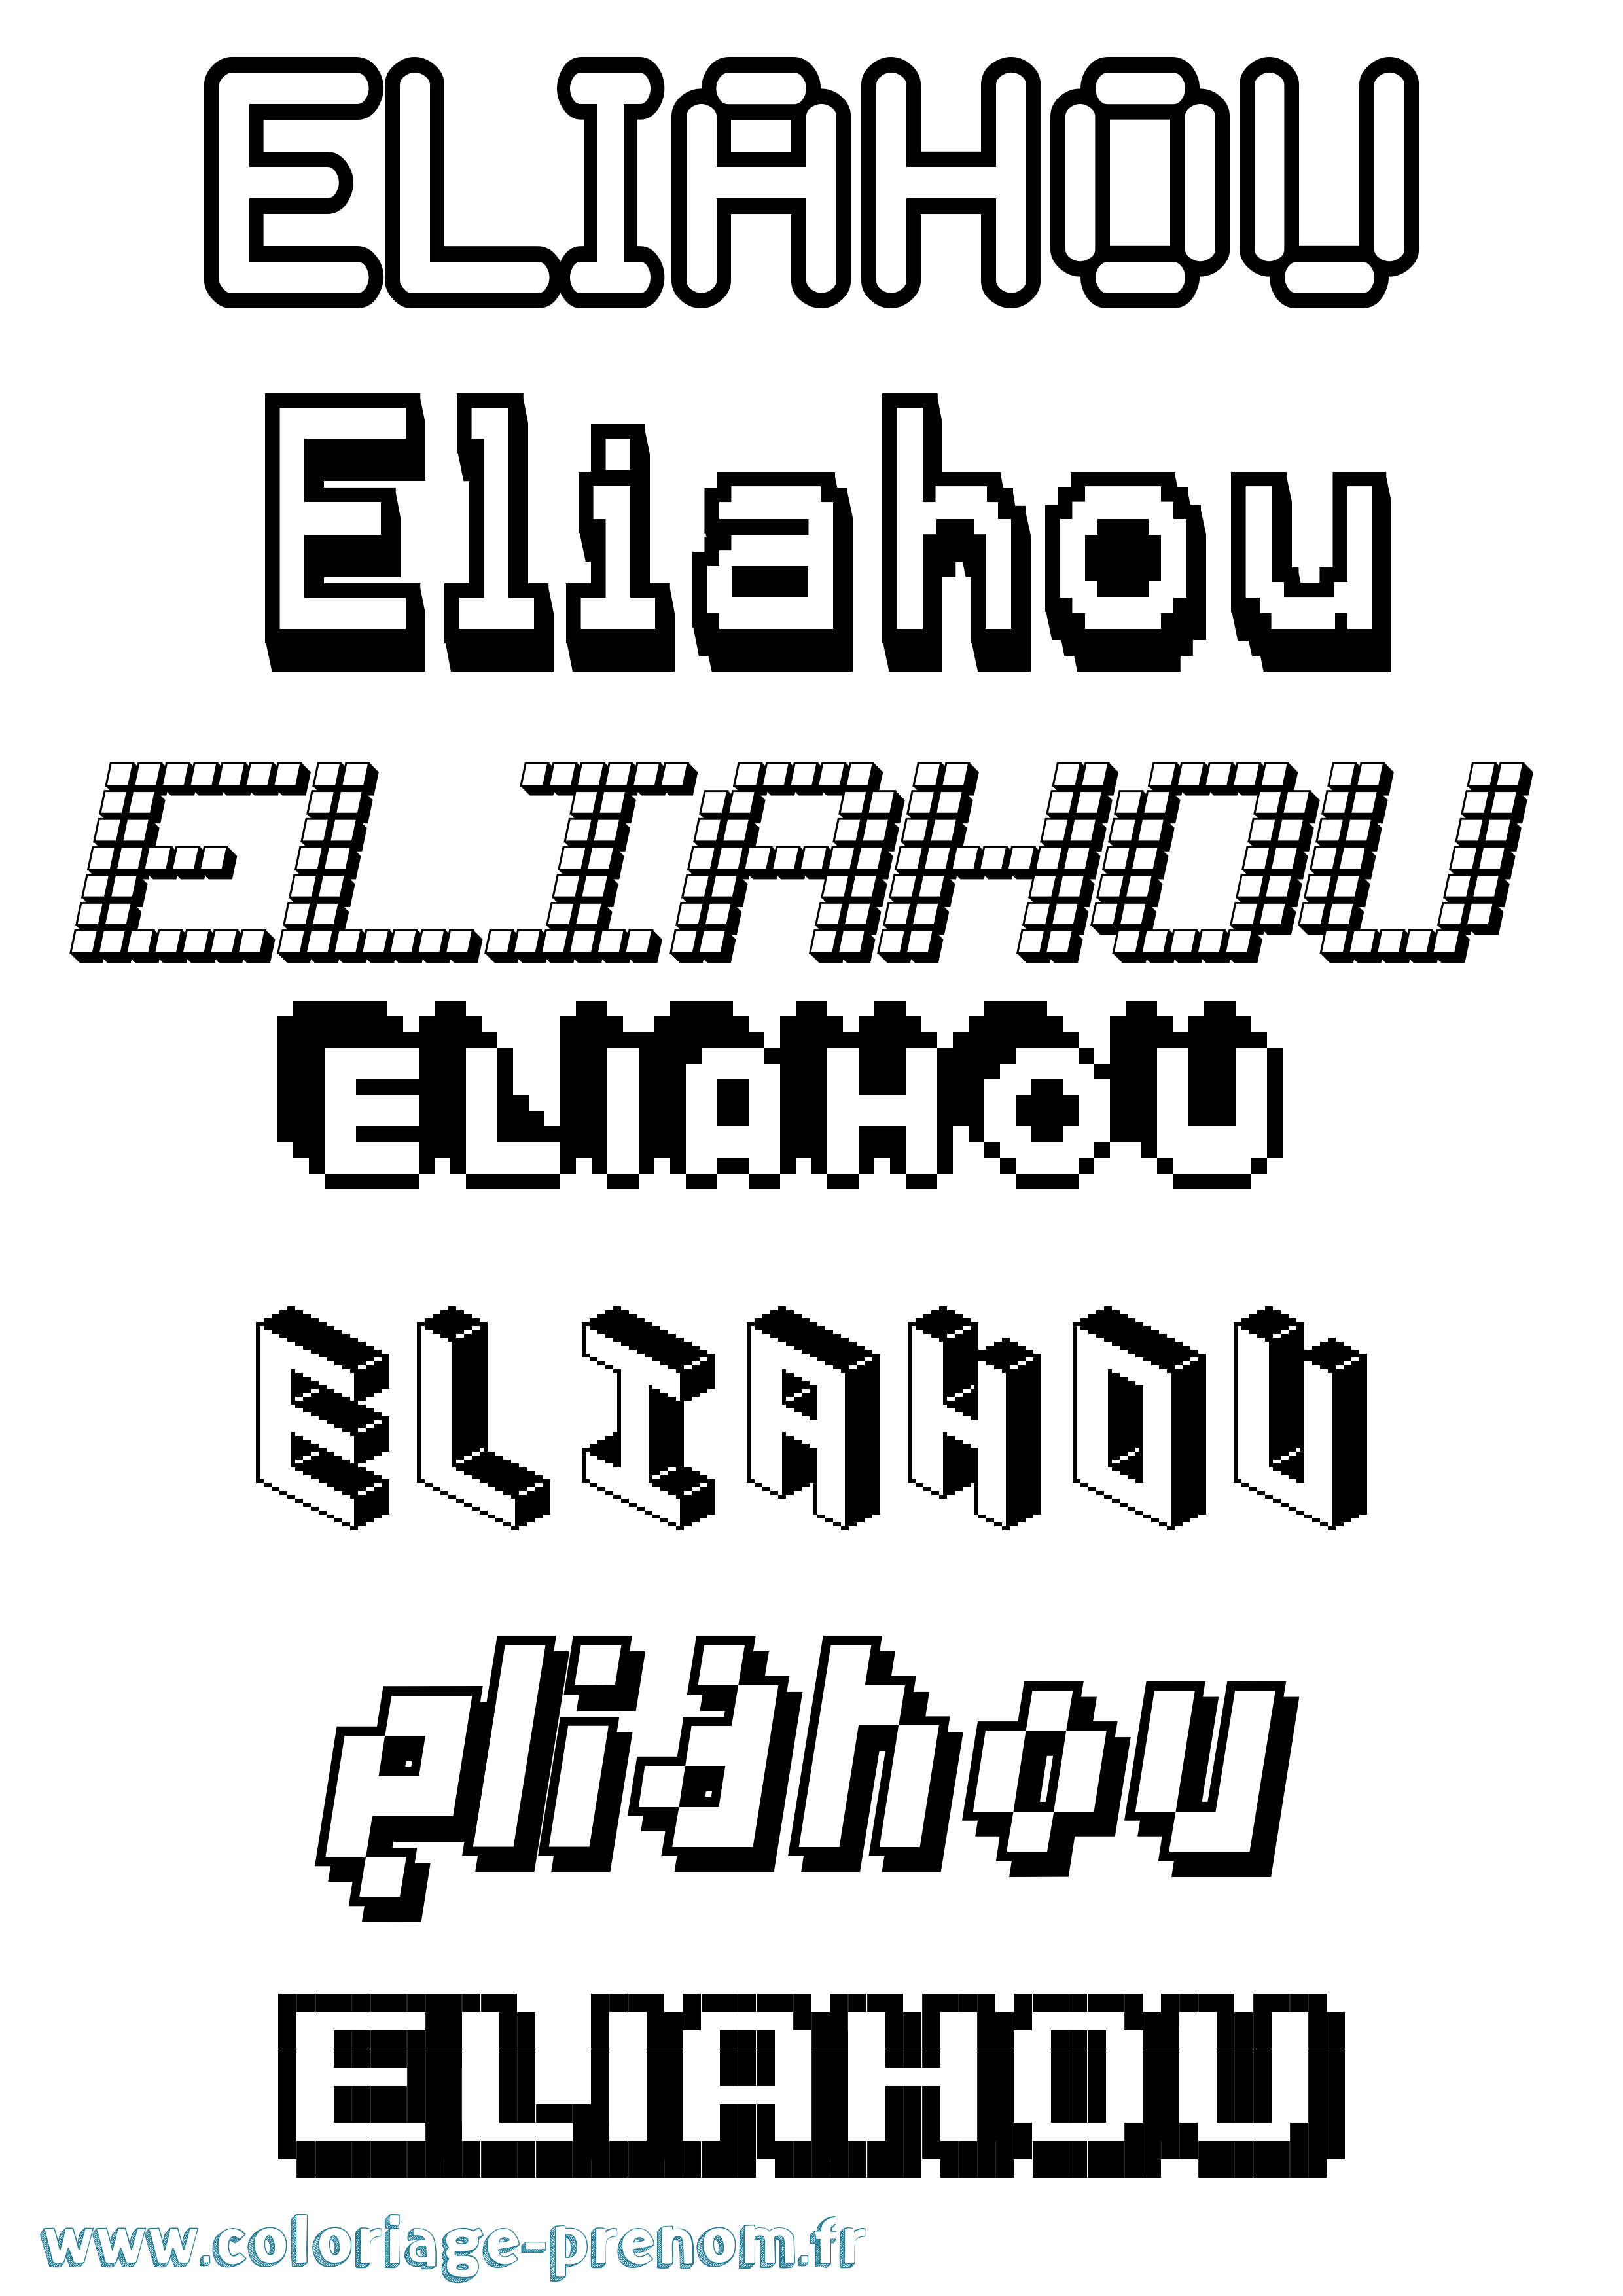 Coloriage prénom Eliahou Pixel